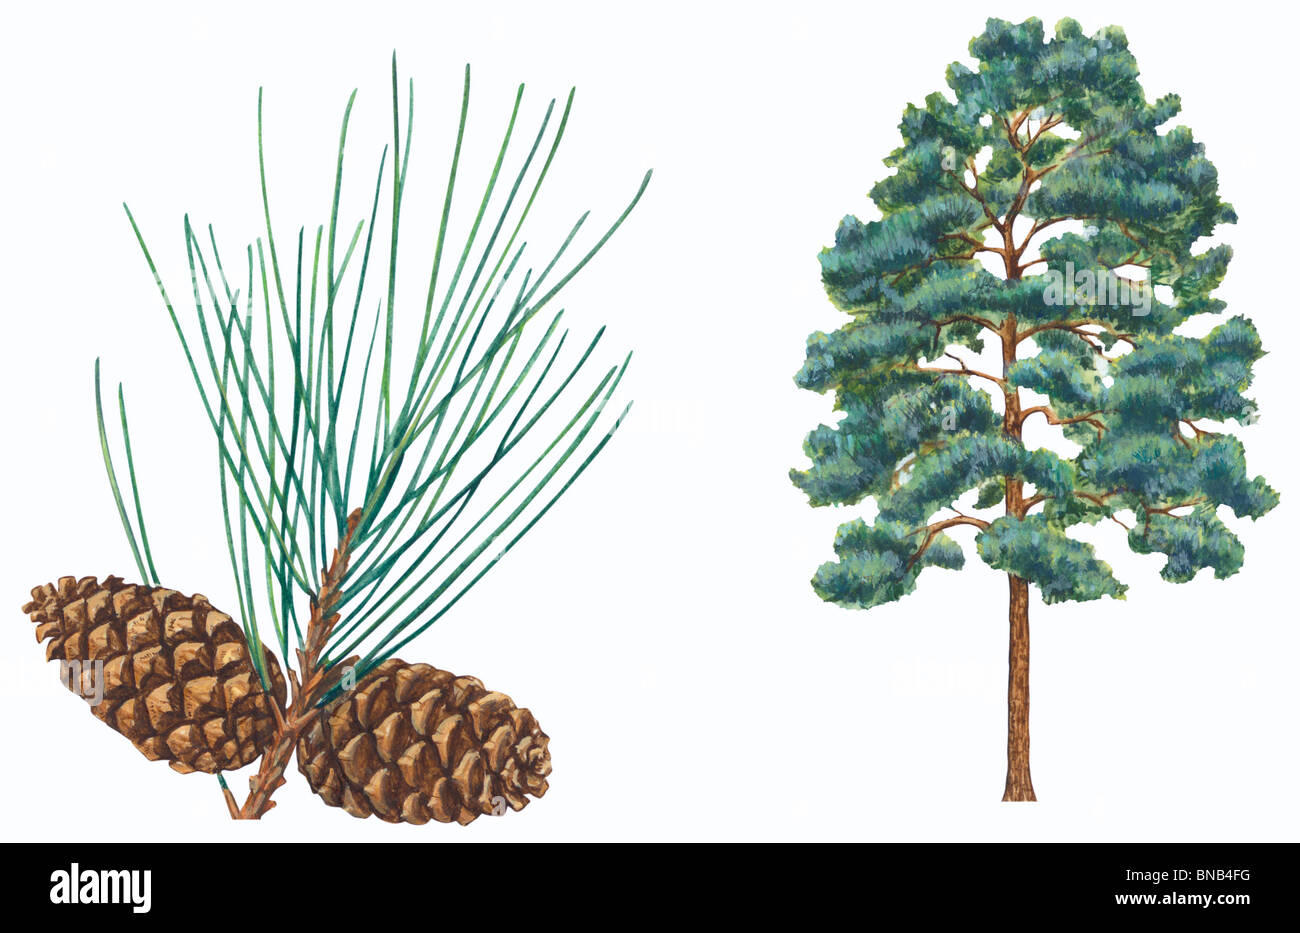 Shortleaf pine tree Stock Photo